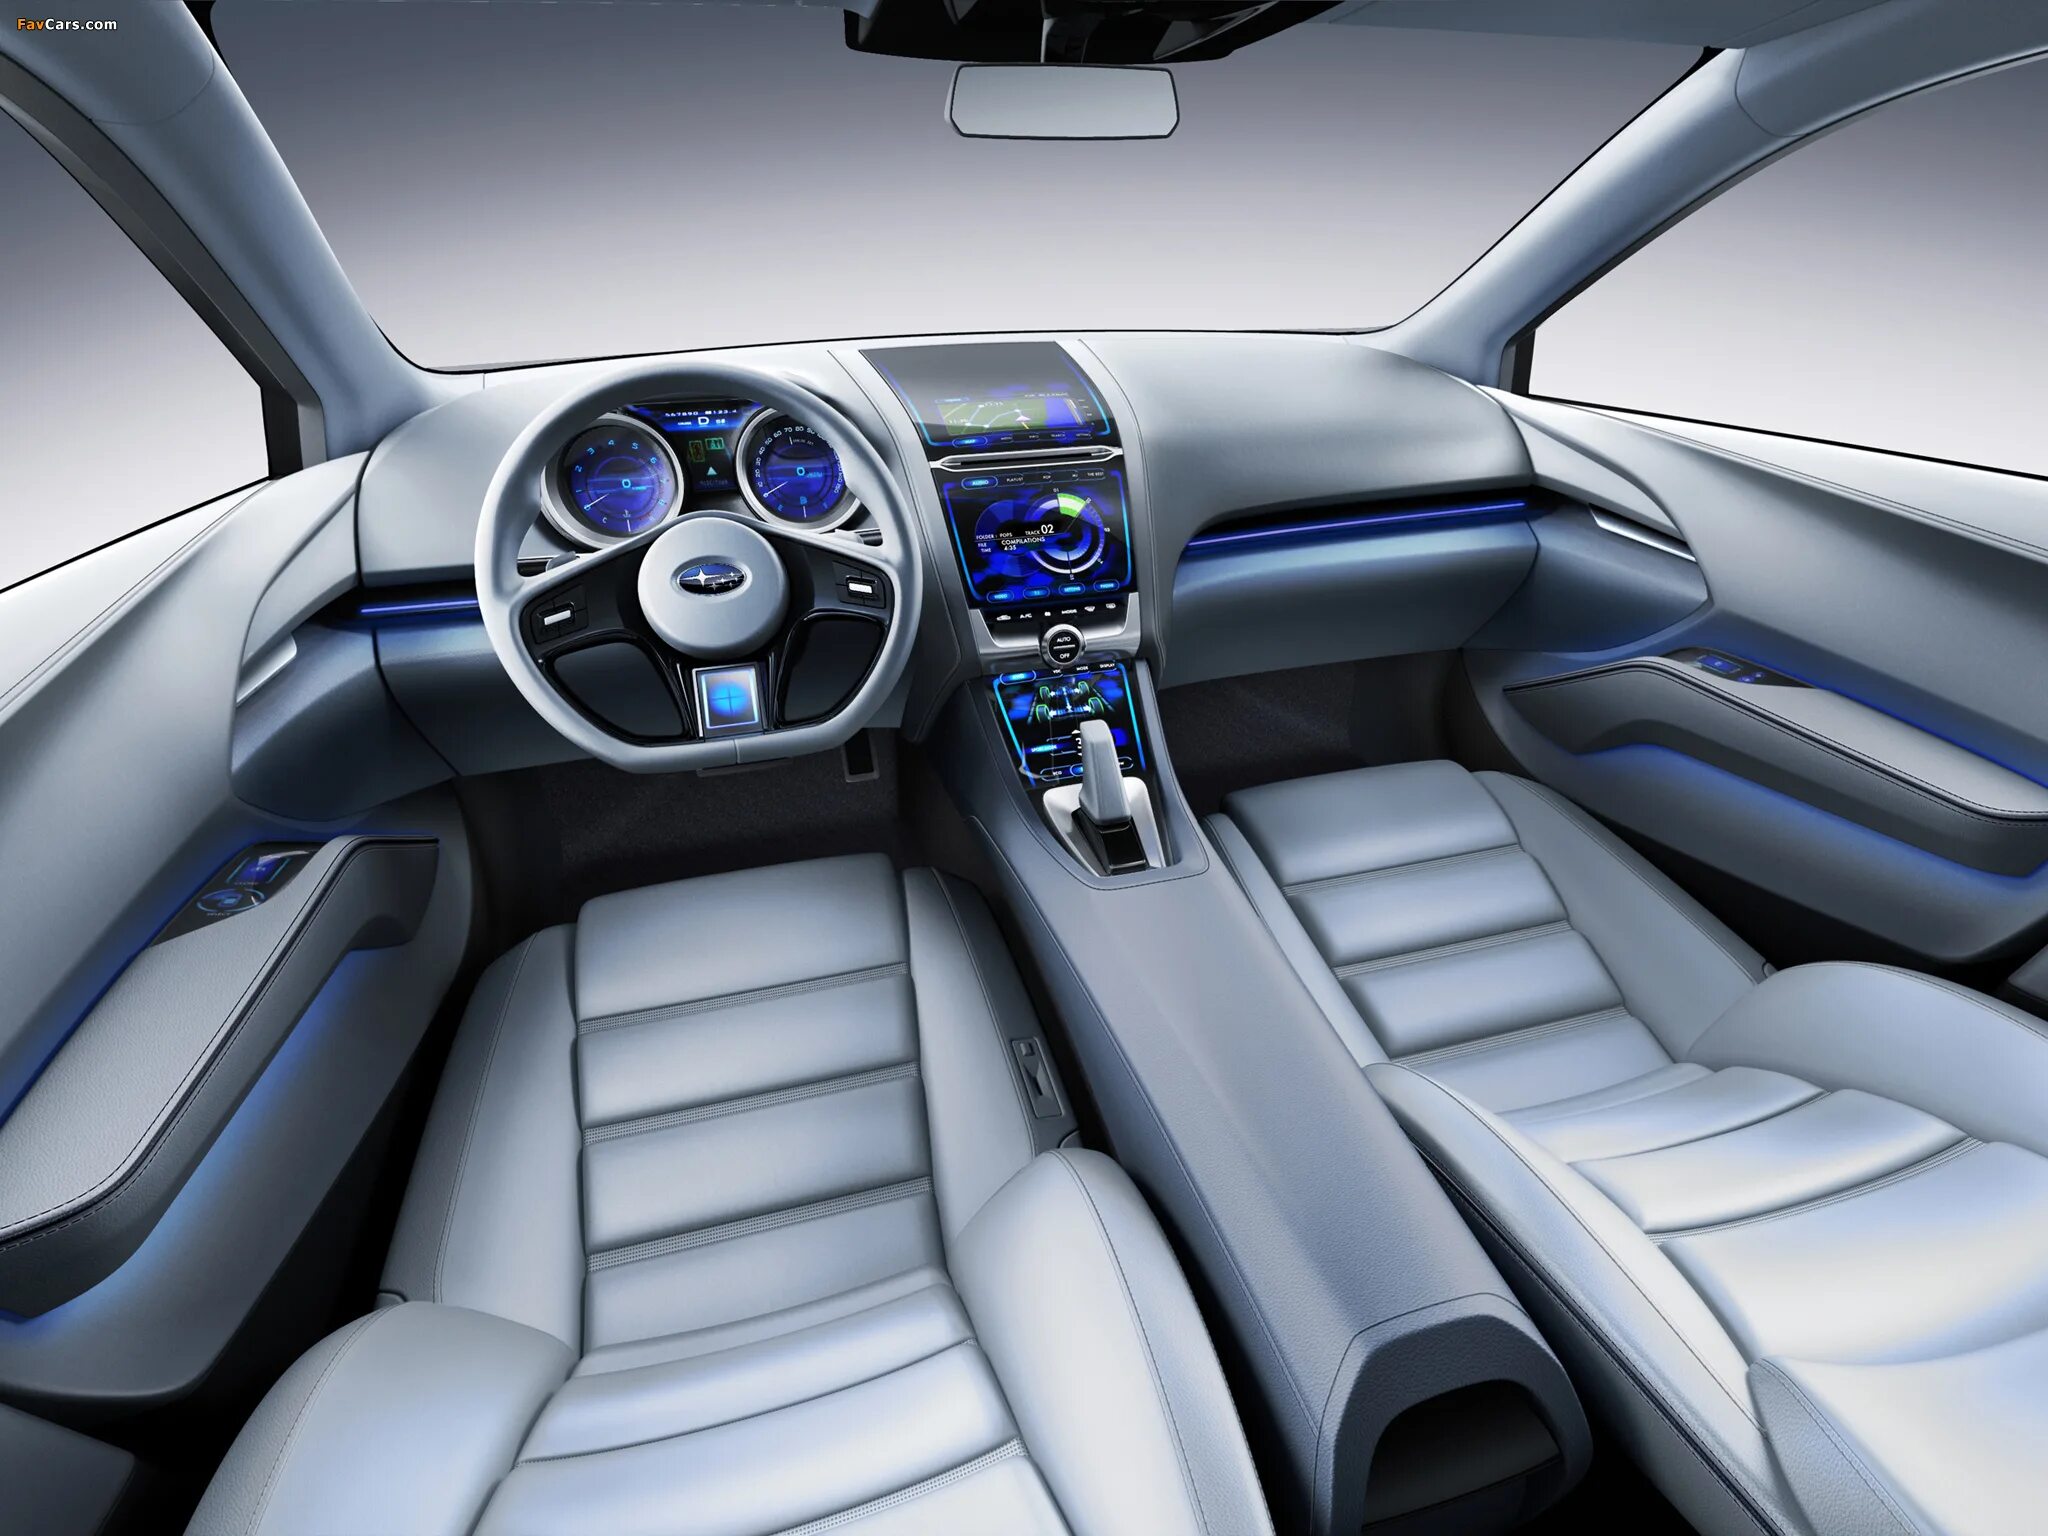 Торпеда иномарки. Субару концепт. Subaru Impreza концепт. Самый красивый салон автомобиля. Торпеда автомобиля.